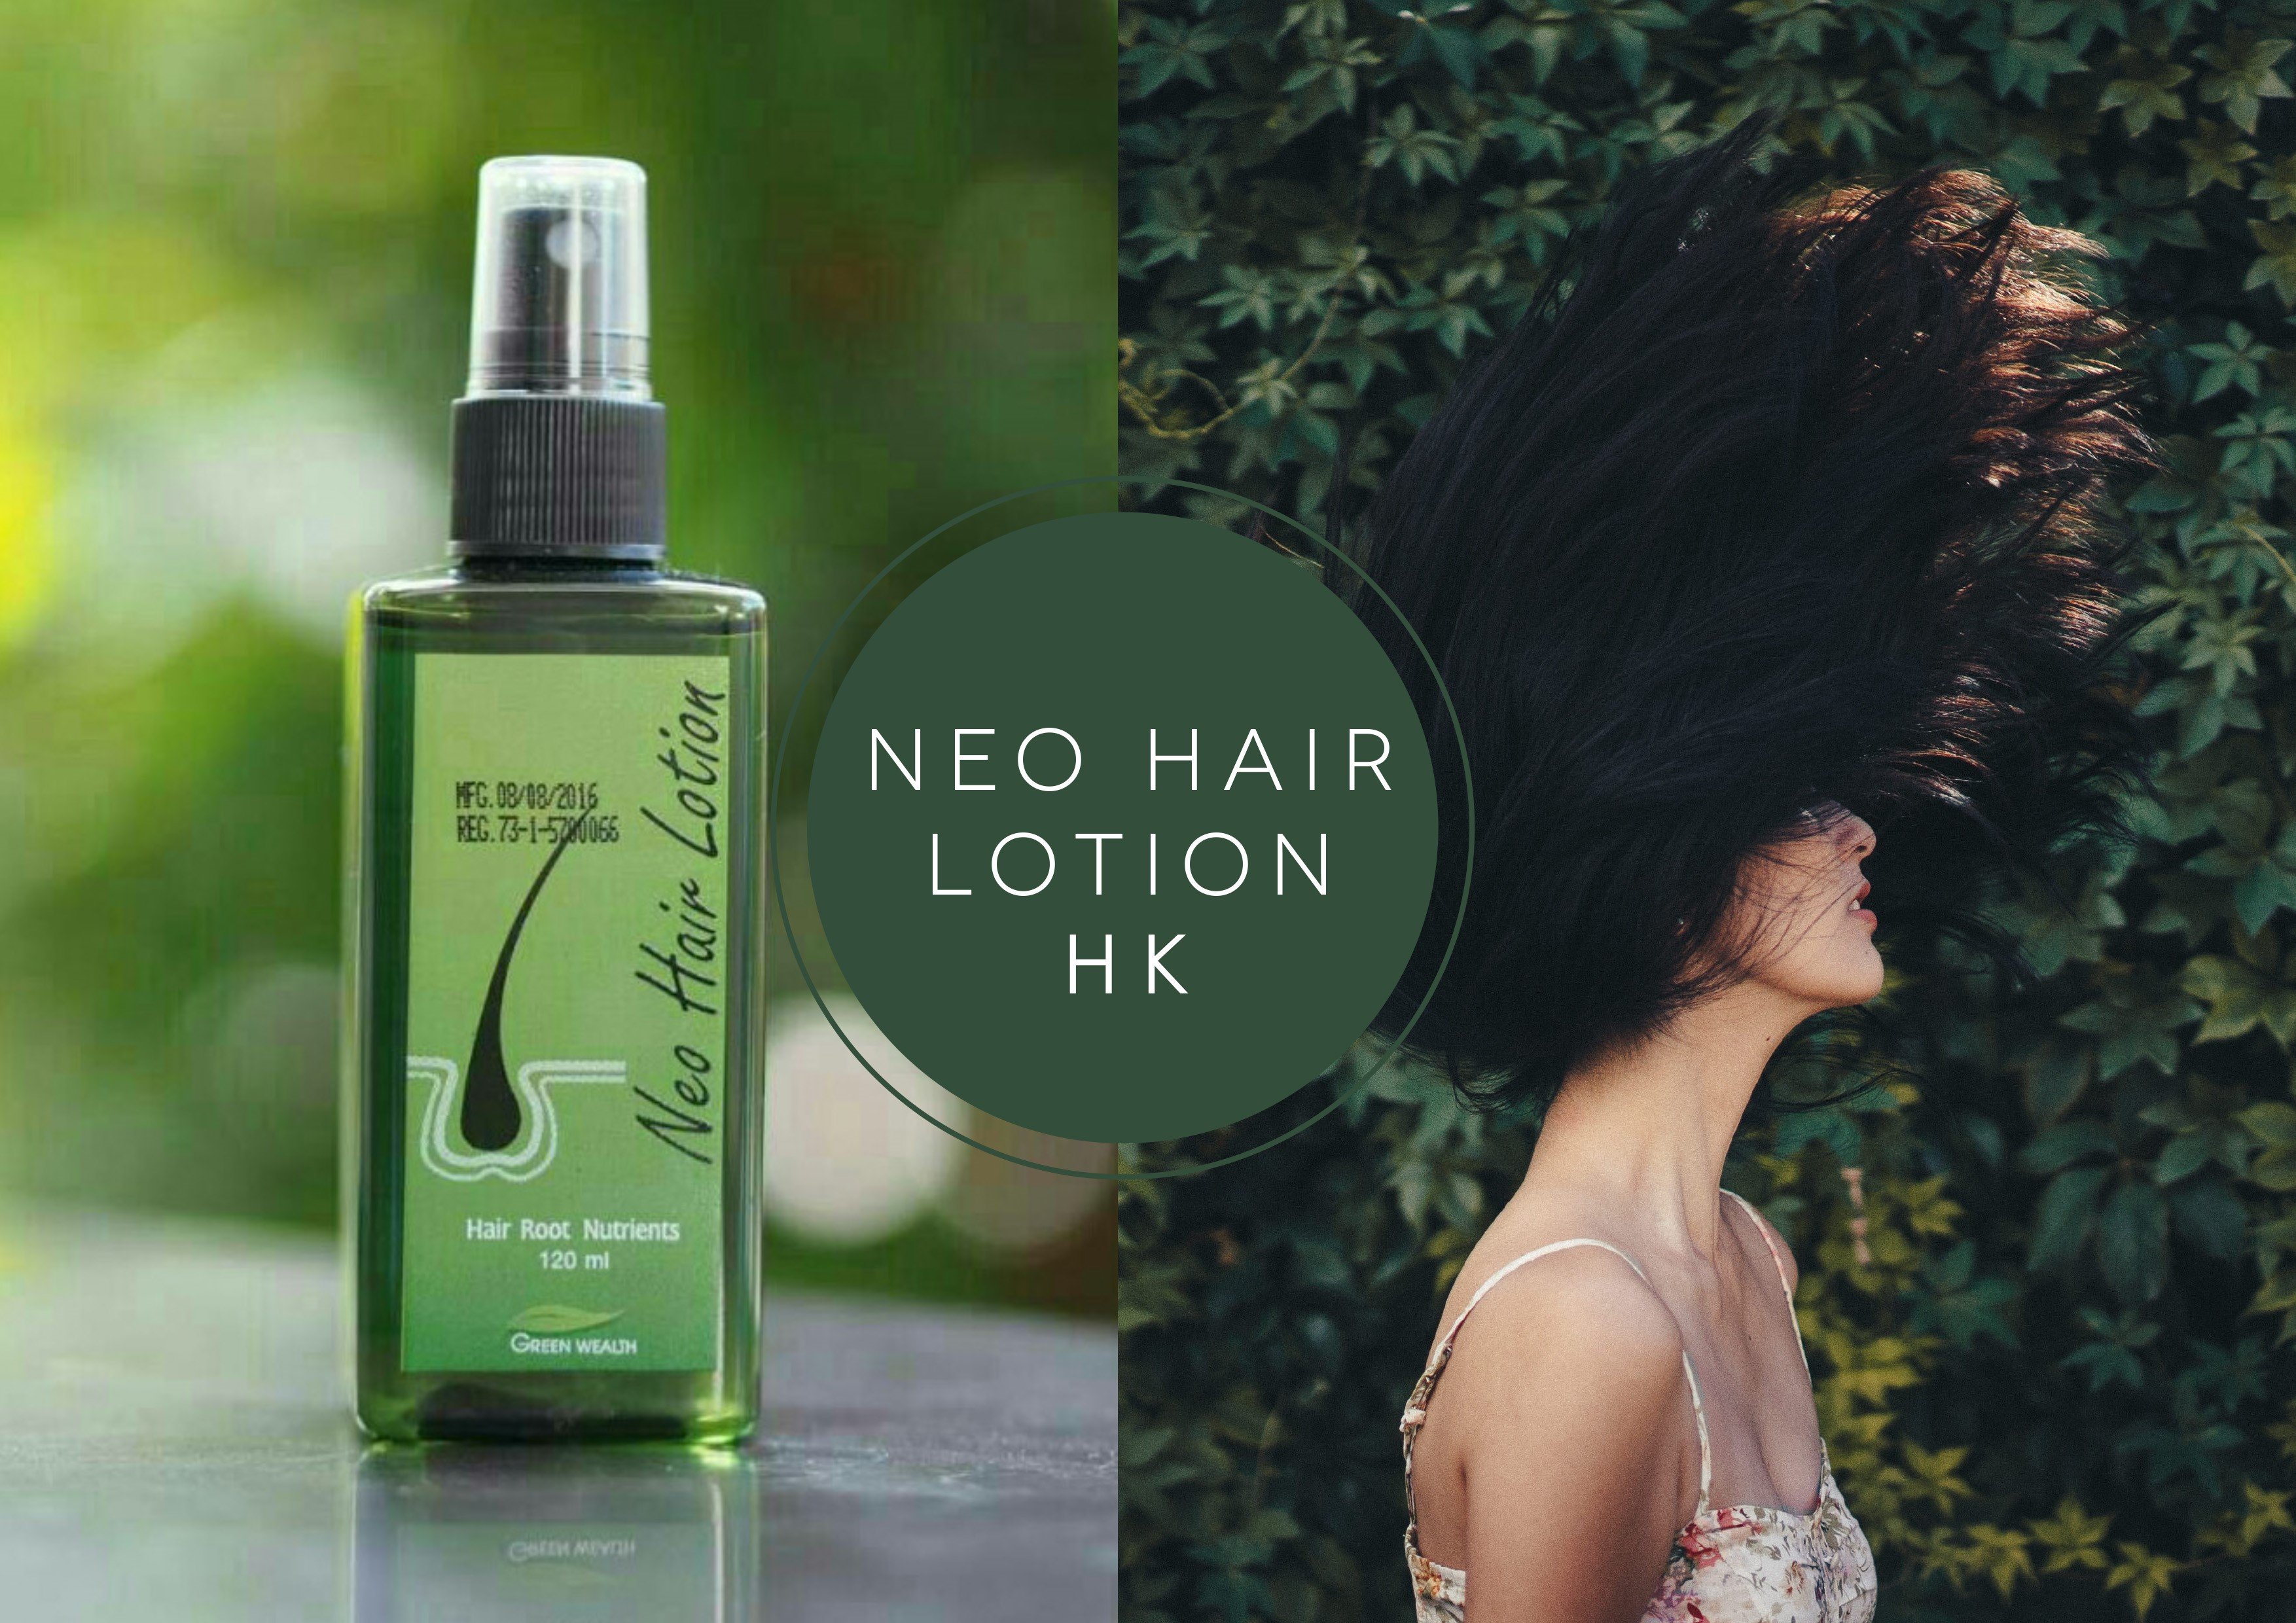 Neo Hair Lotion HK owned by MyTypeTradingLtd